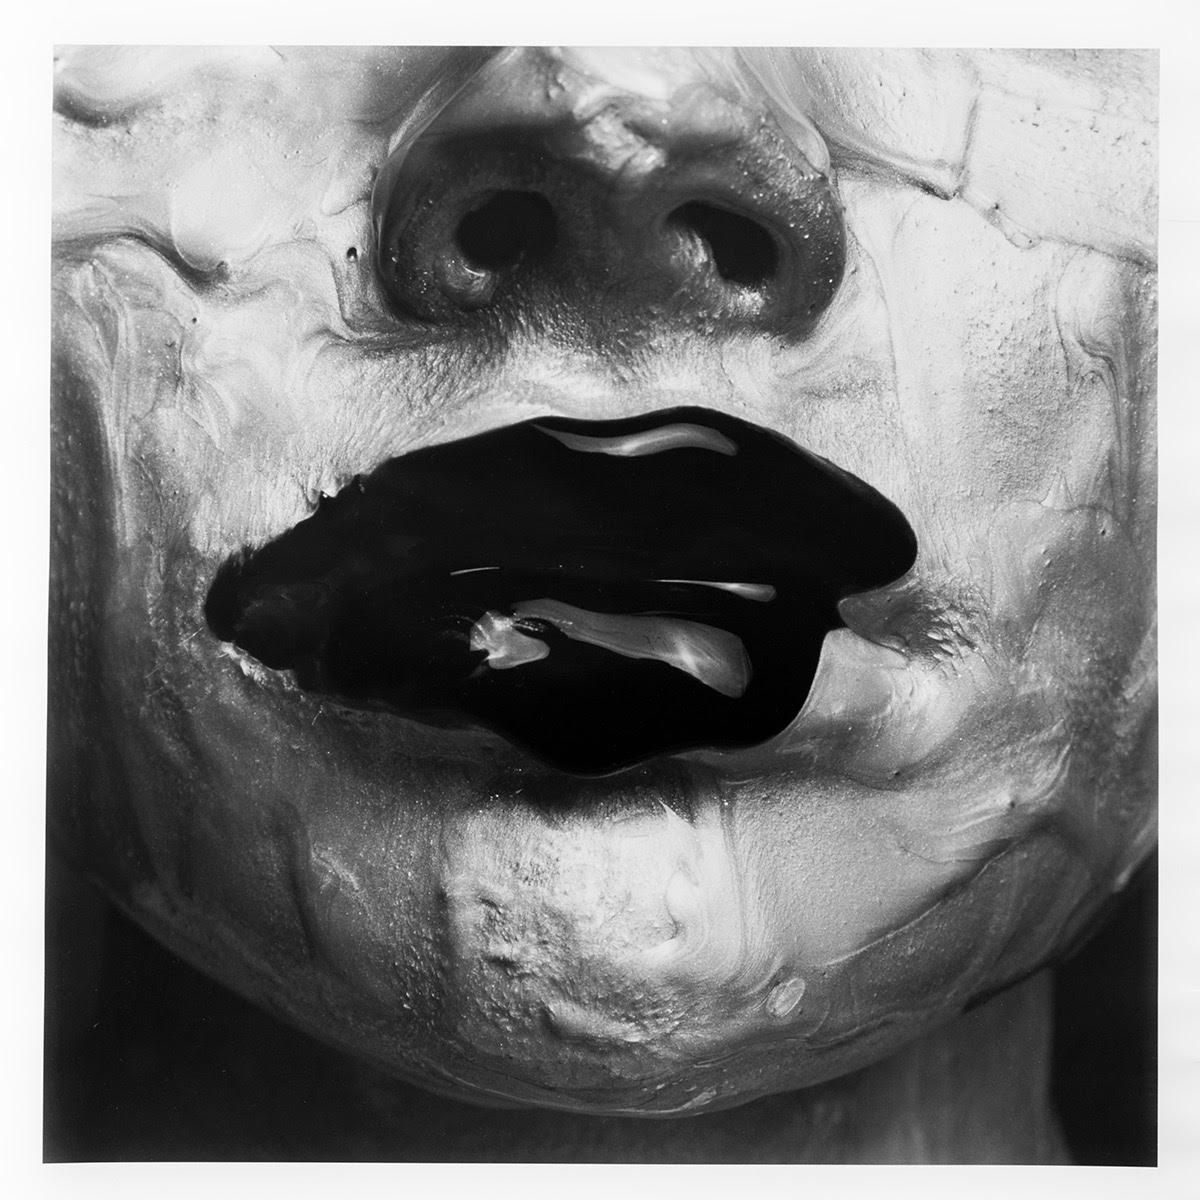 Tyler Shields Portrait Photograph - Monochrome Lips (18" x 18")